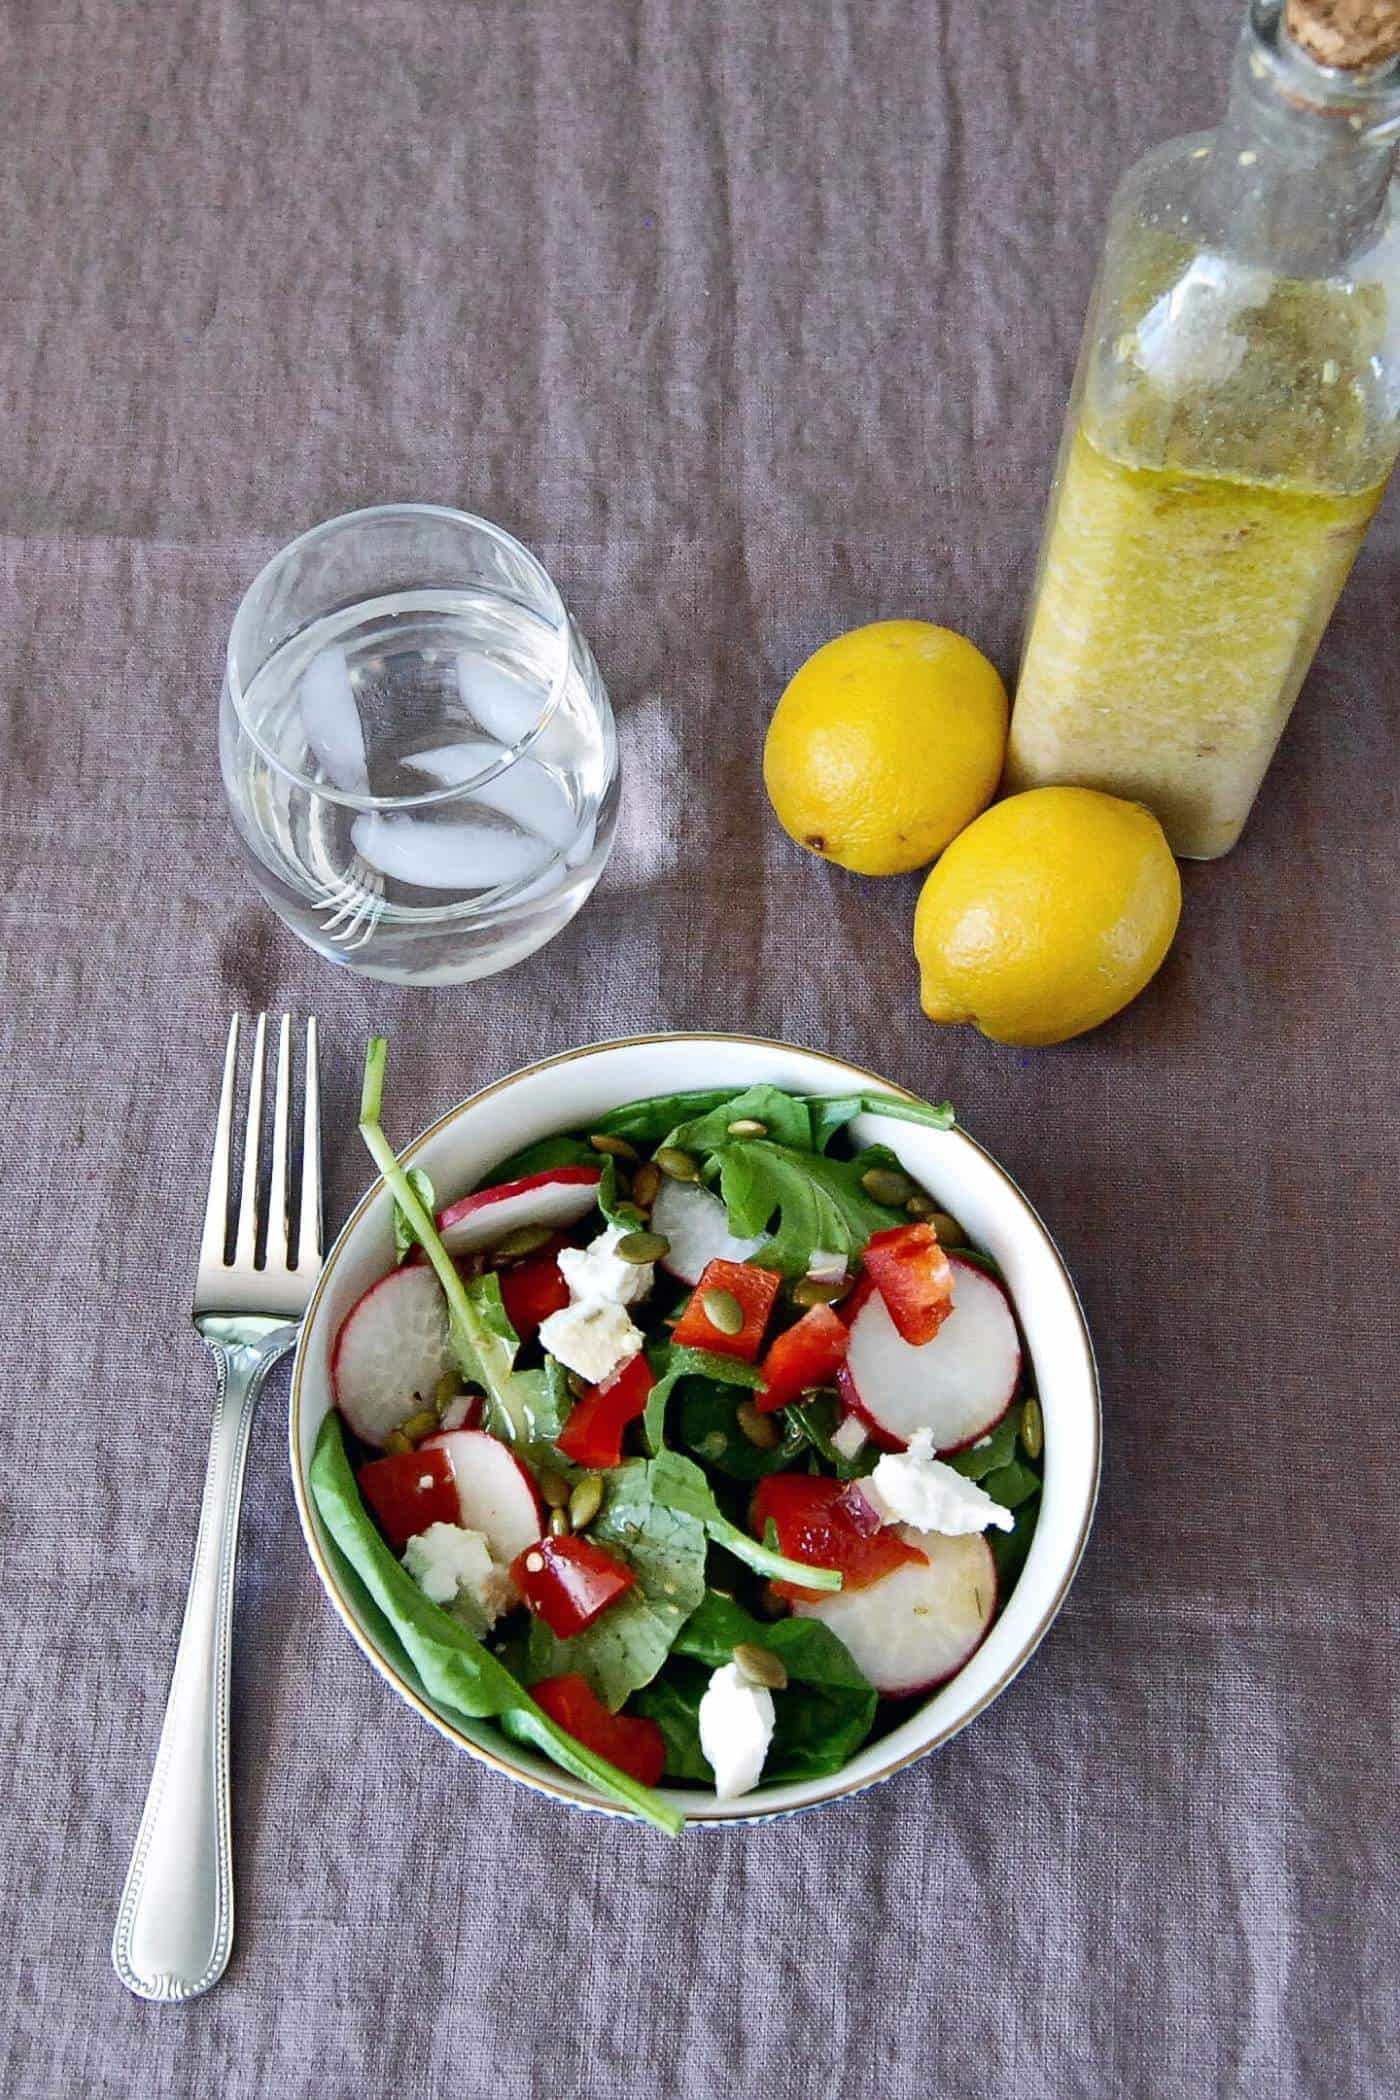 lemon and rosemary vinaigrette with salad.